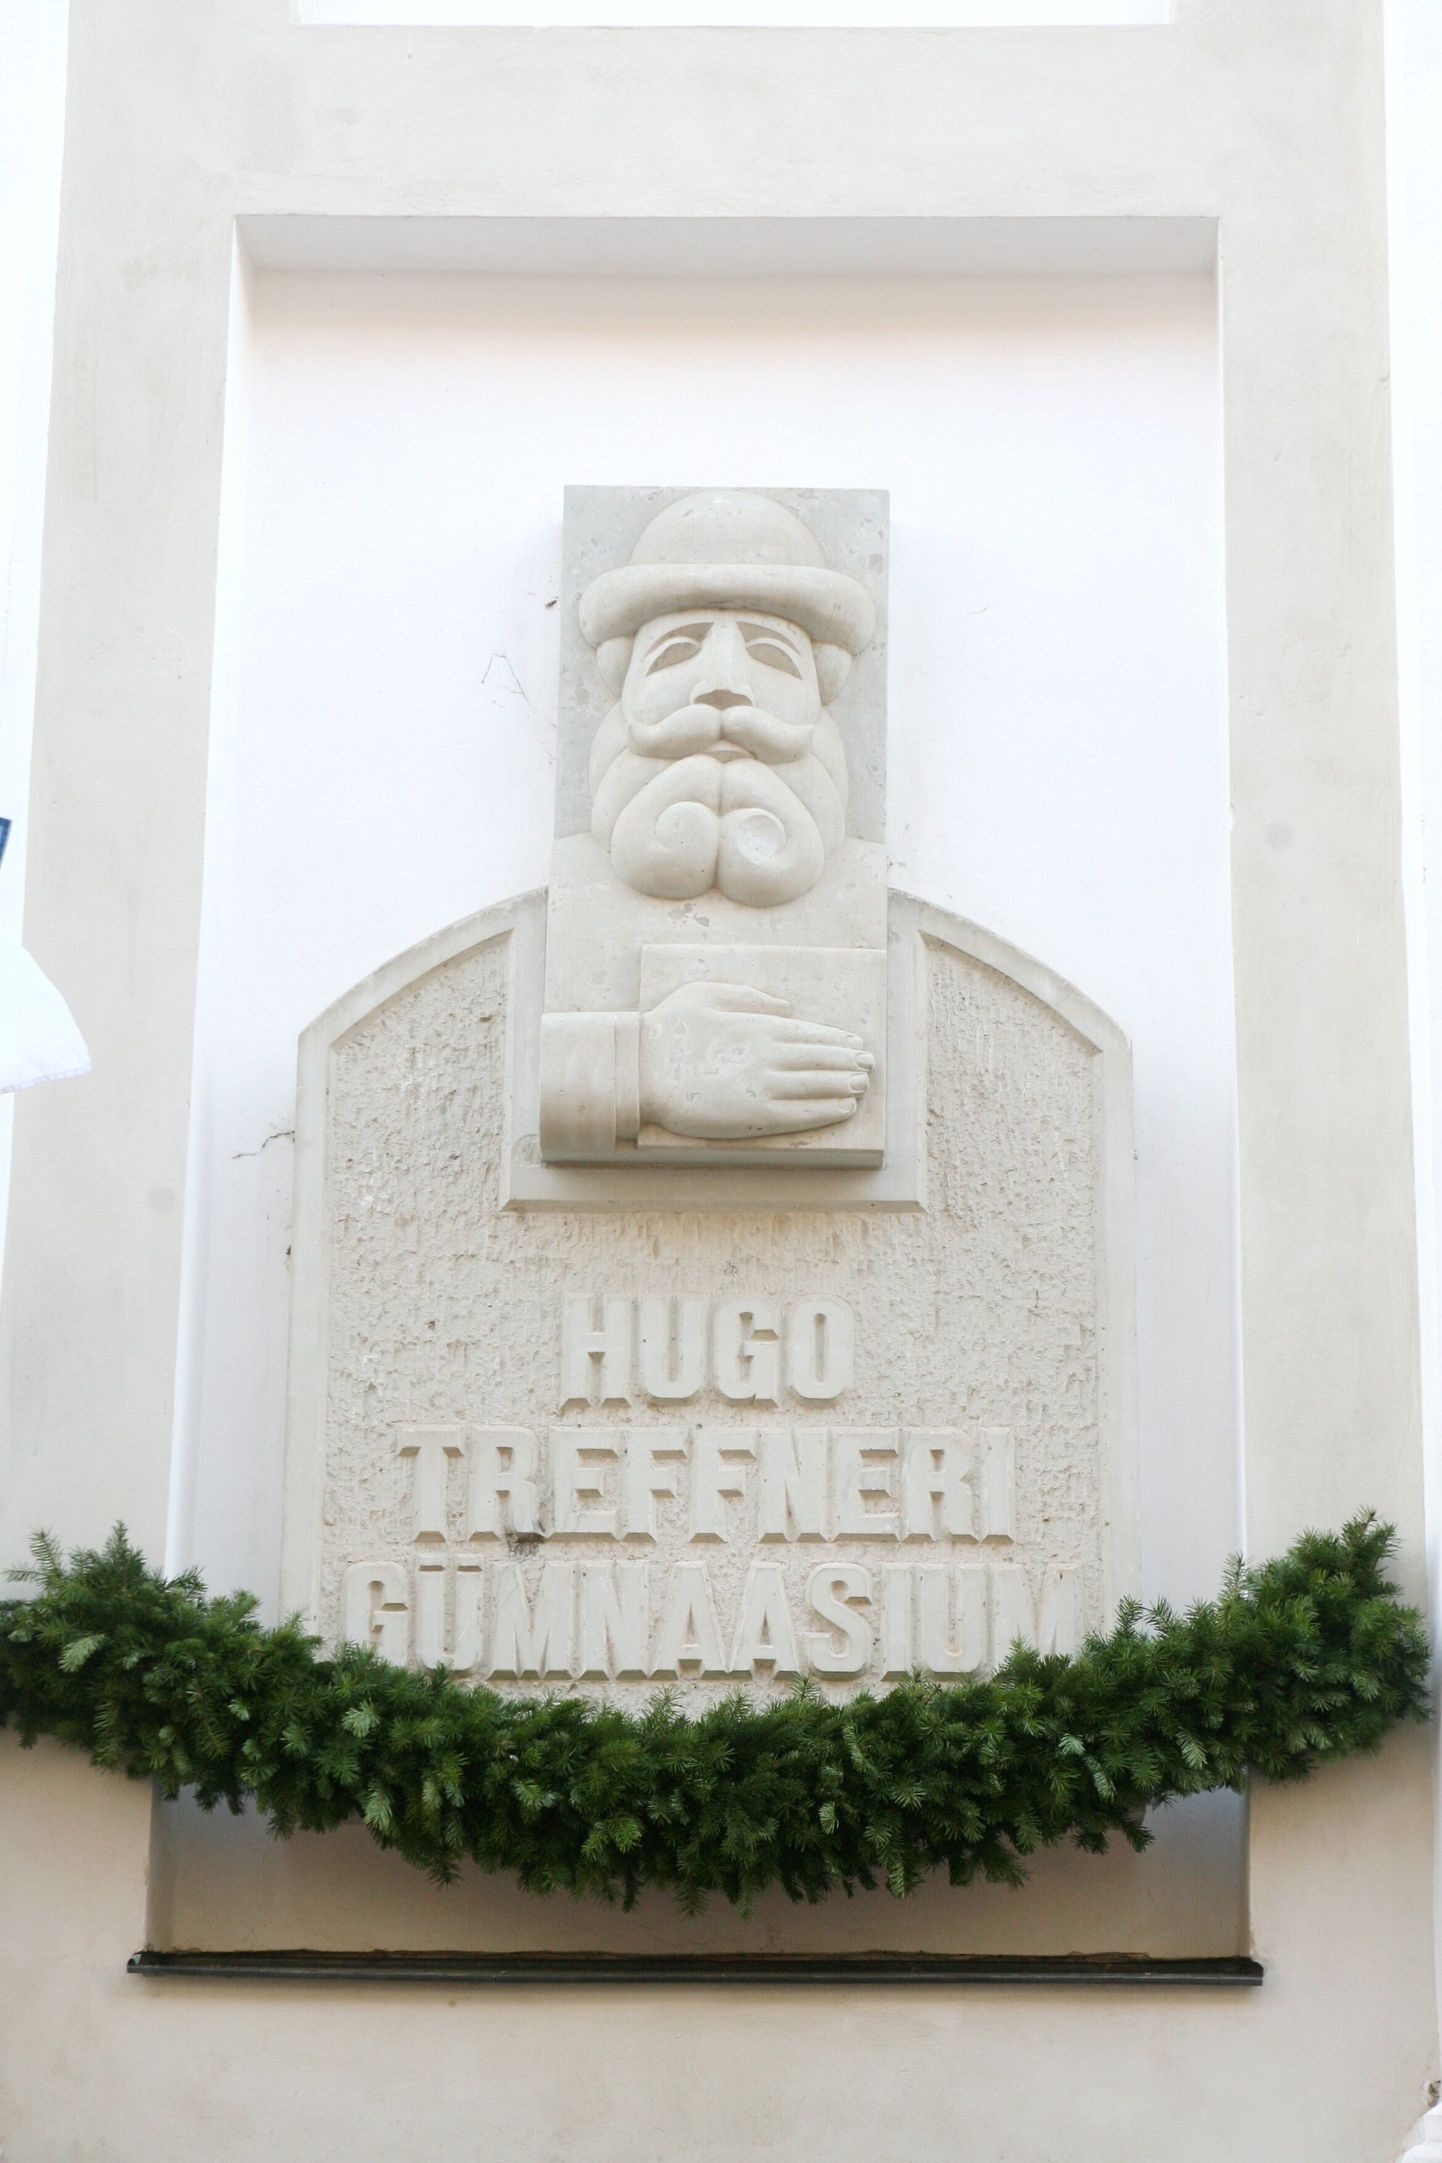 Hugo Treffneri gümnaasium.